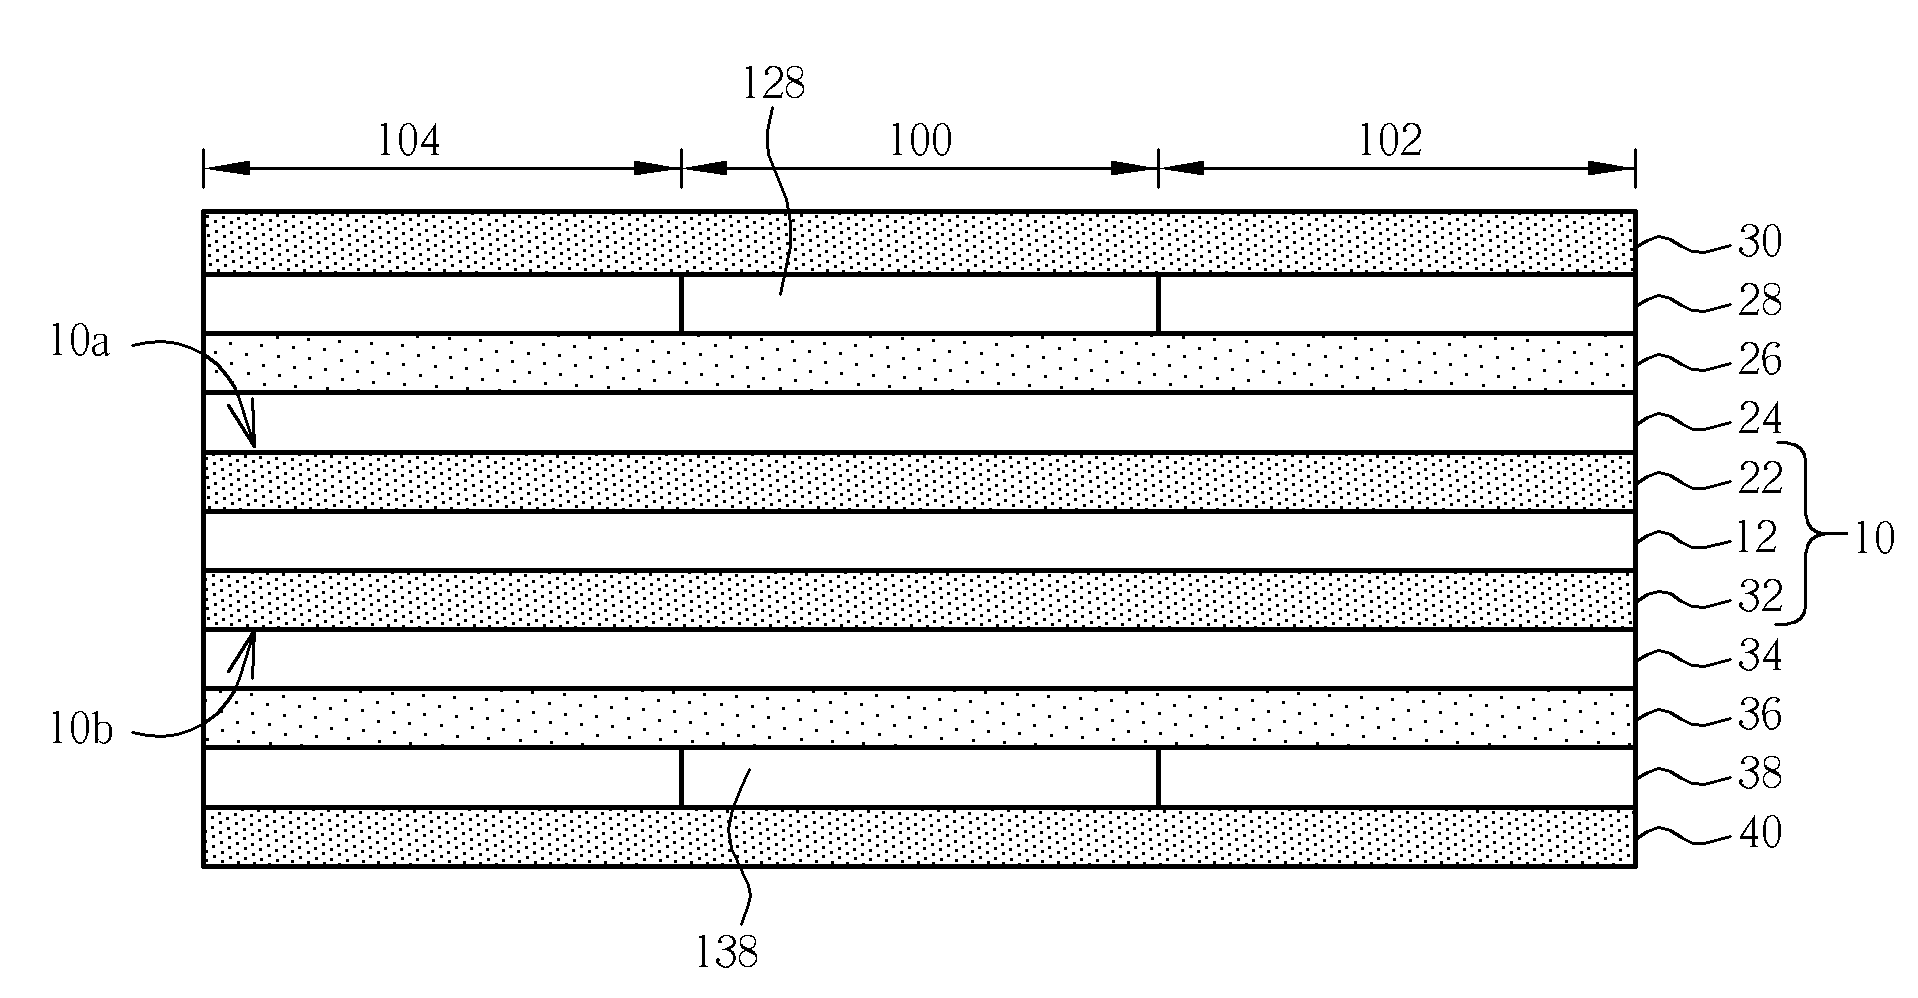 Method for manufacturing a rigid-flex circuit board